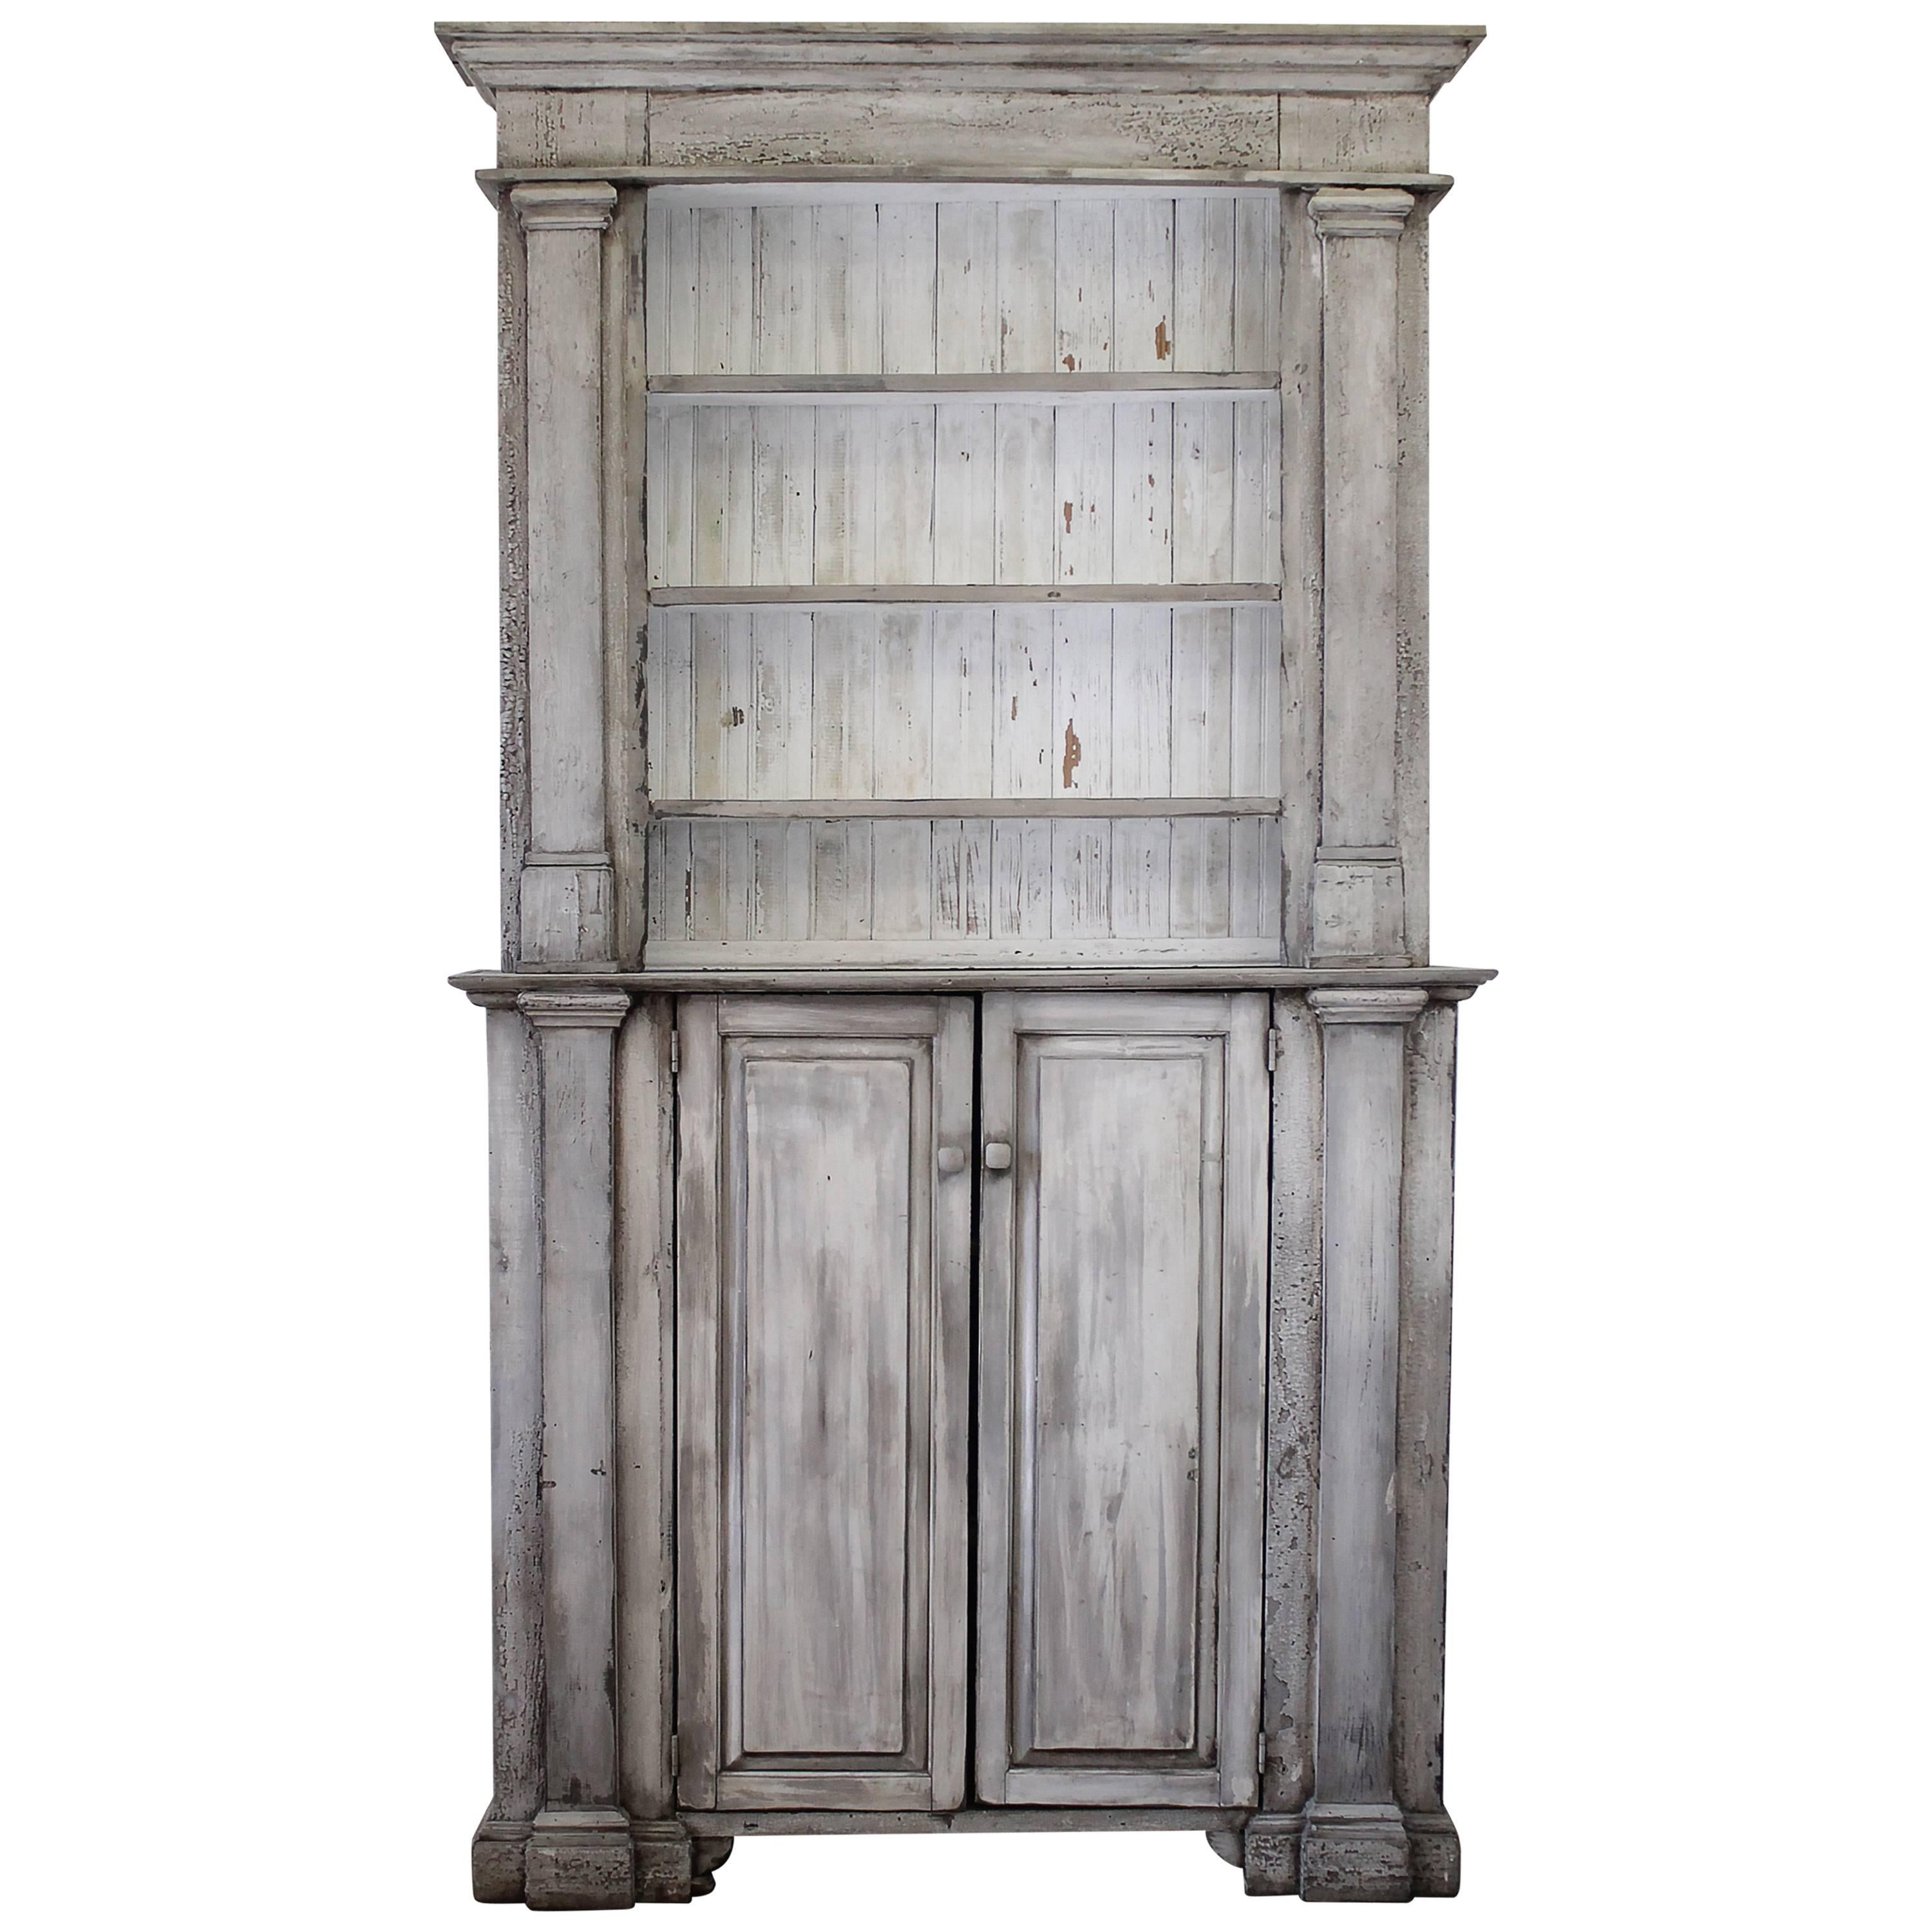 Antique Primitive Style 2 Part Display Cabinet For Sale